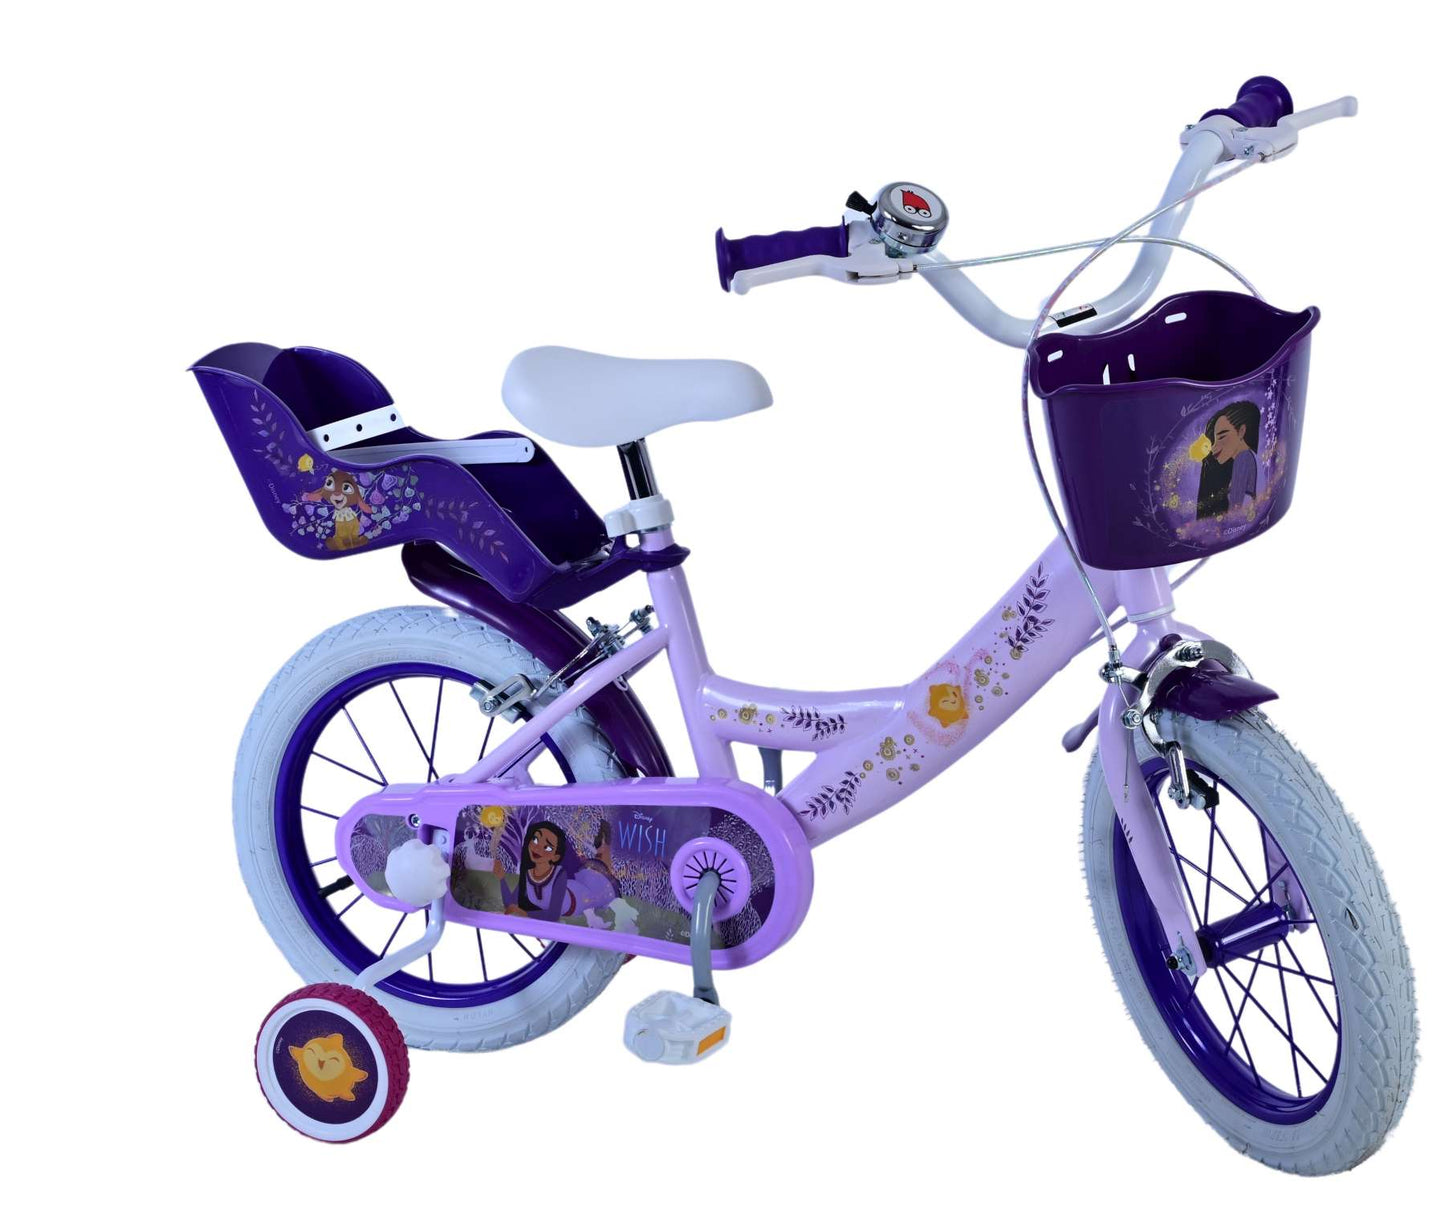 Wish Wish Children's Bike Girls 14 pulgadas Púrpura de dos manos de la mano